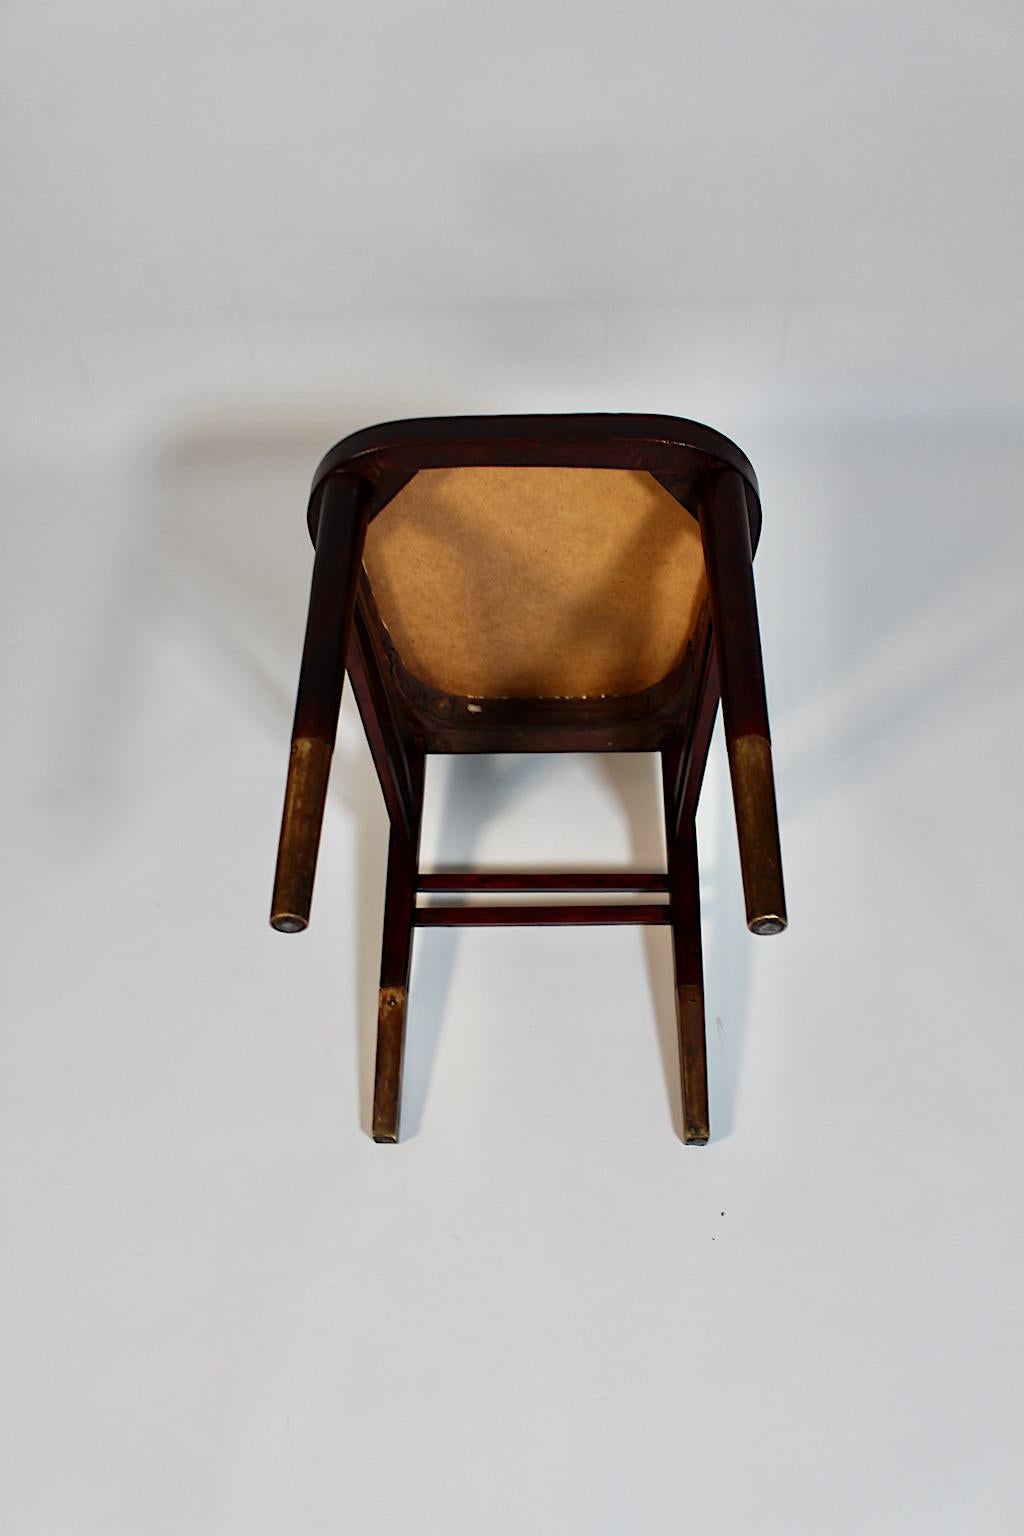 Jugendstil Side Chair Beech Leather by Joseph Urban Gebrüder Thonet 1903 Vienna For Sale 14